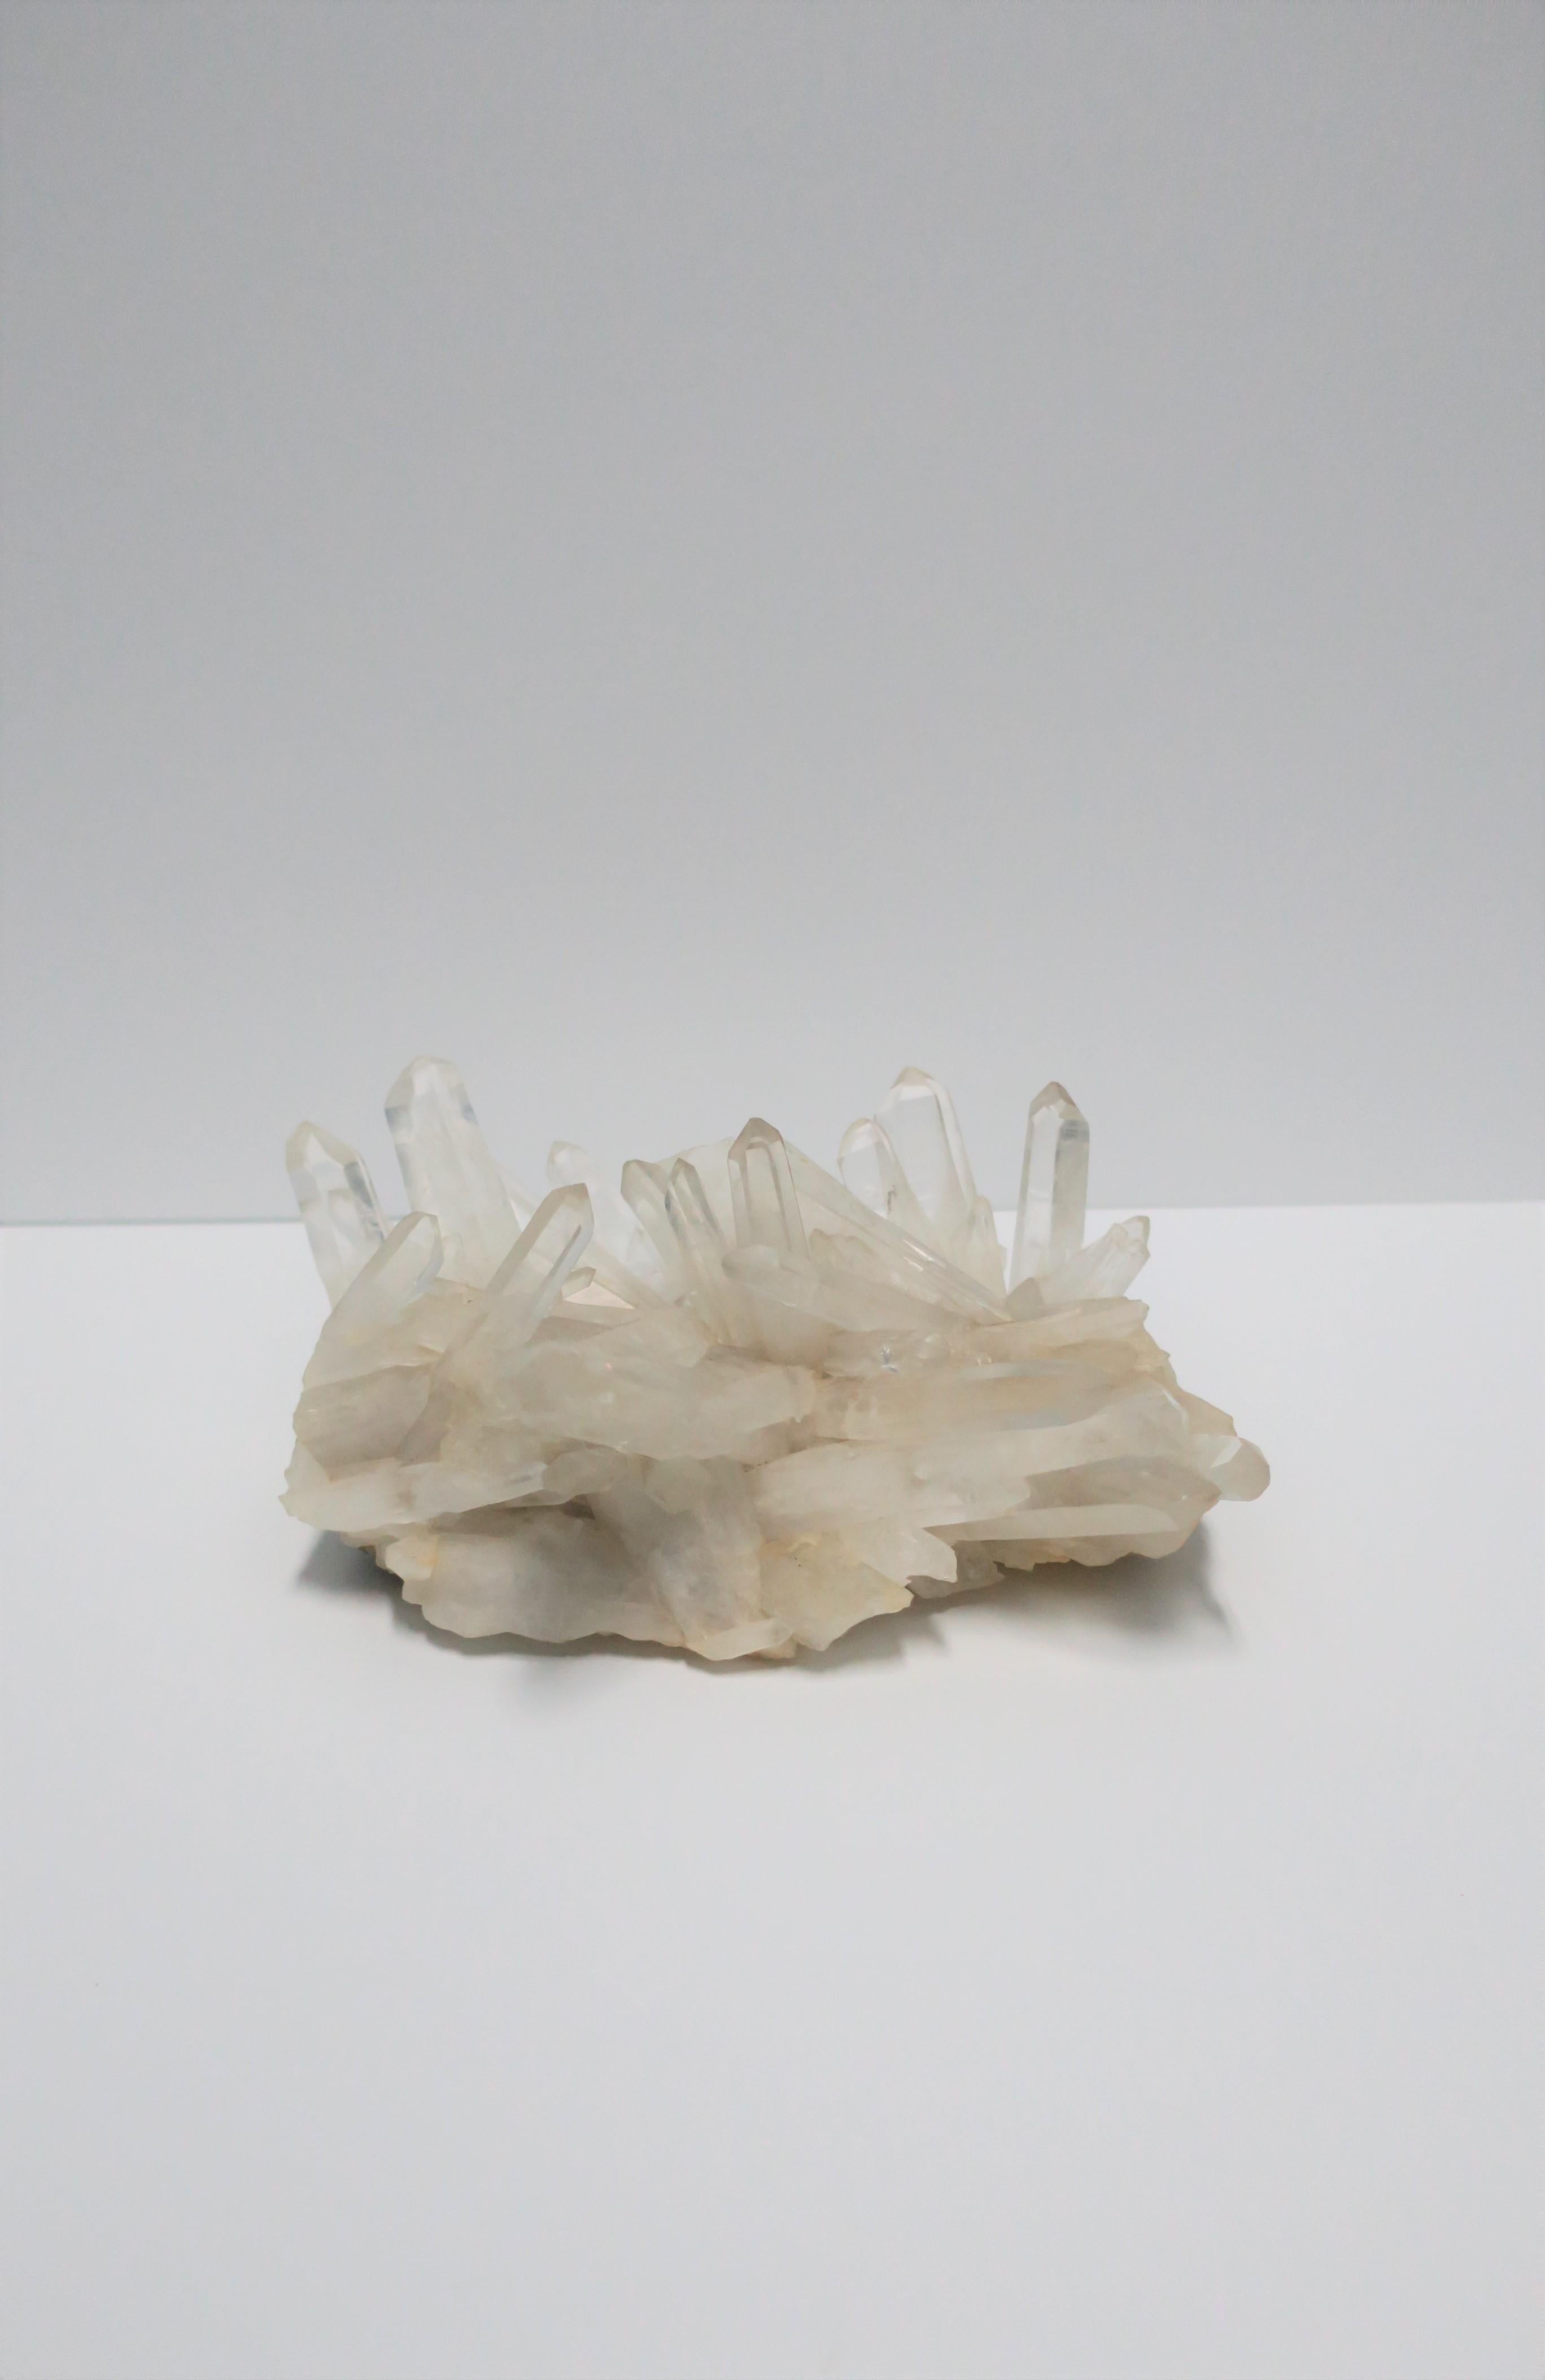 A vintage rock crystal natural specimen piece aka clear quartz. 

Piece measures: 3.75